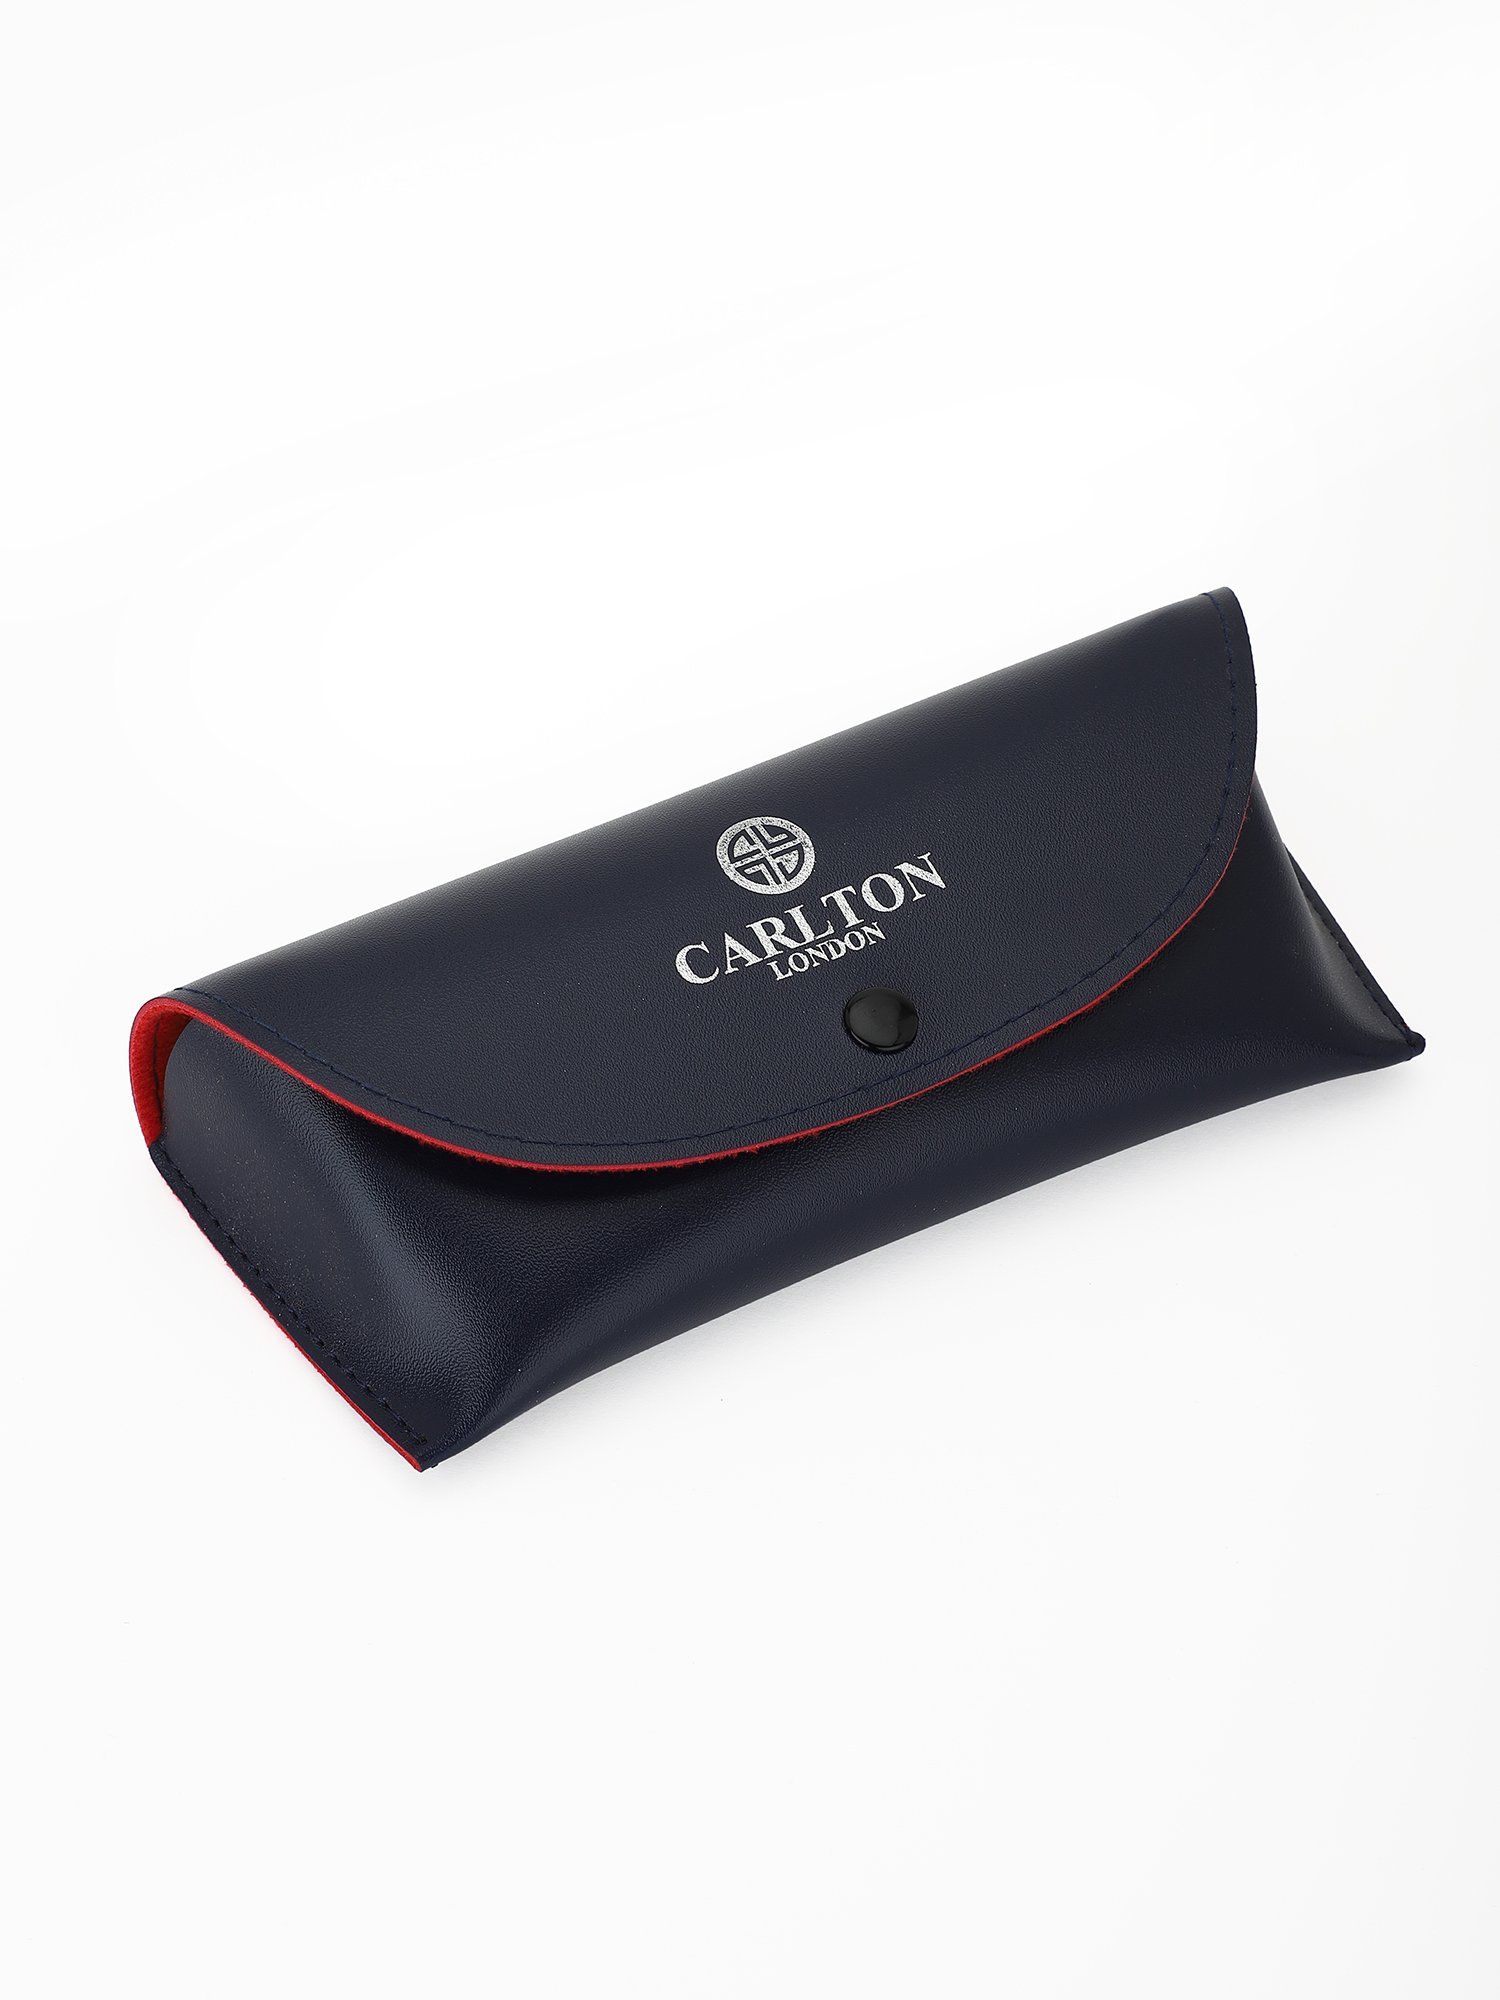 Carlton London Luggage and Travel Bag : Buy Carlton London Trolley Bag -  Grey (M) Online | Nykaa Fashion